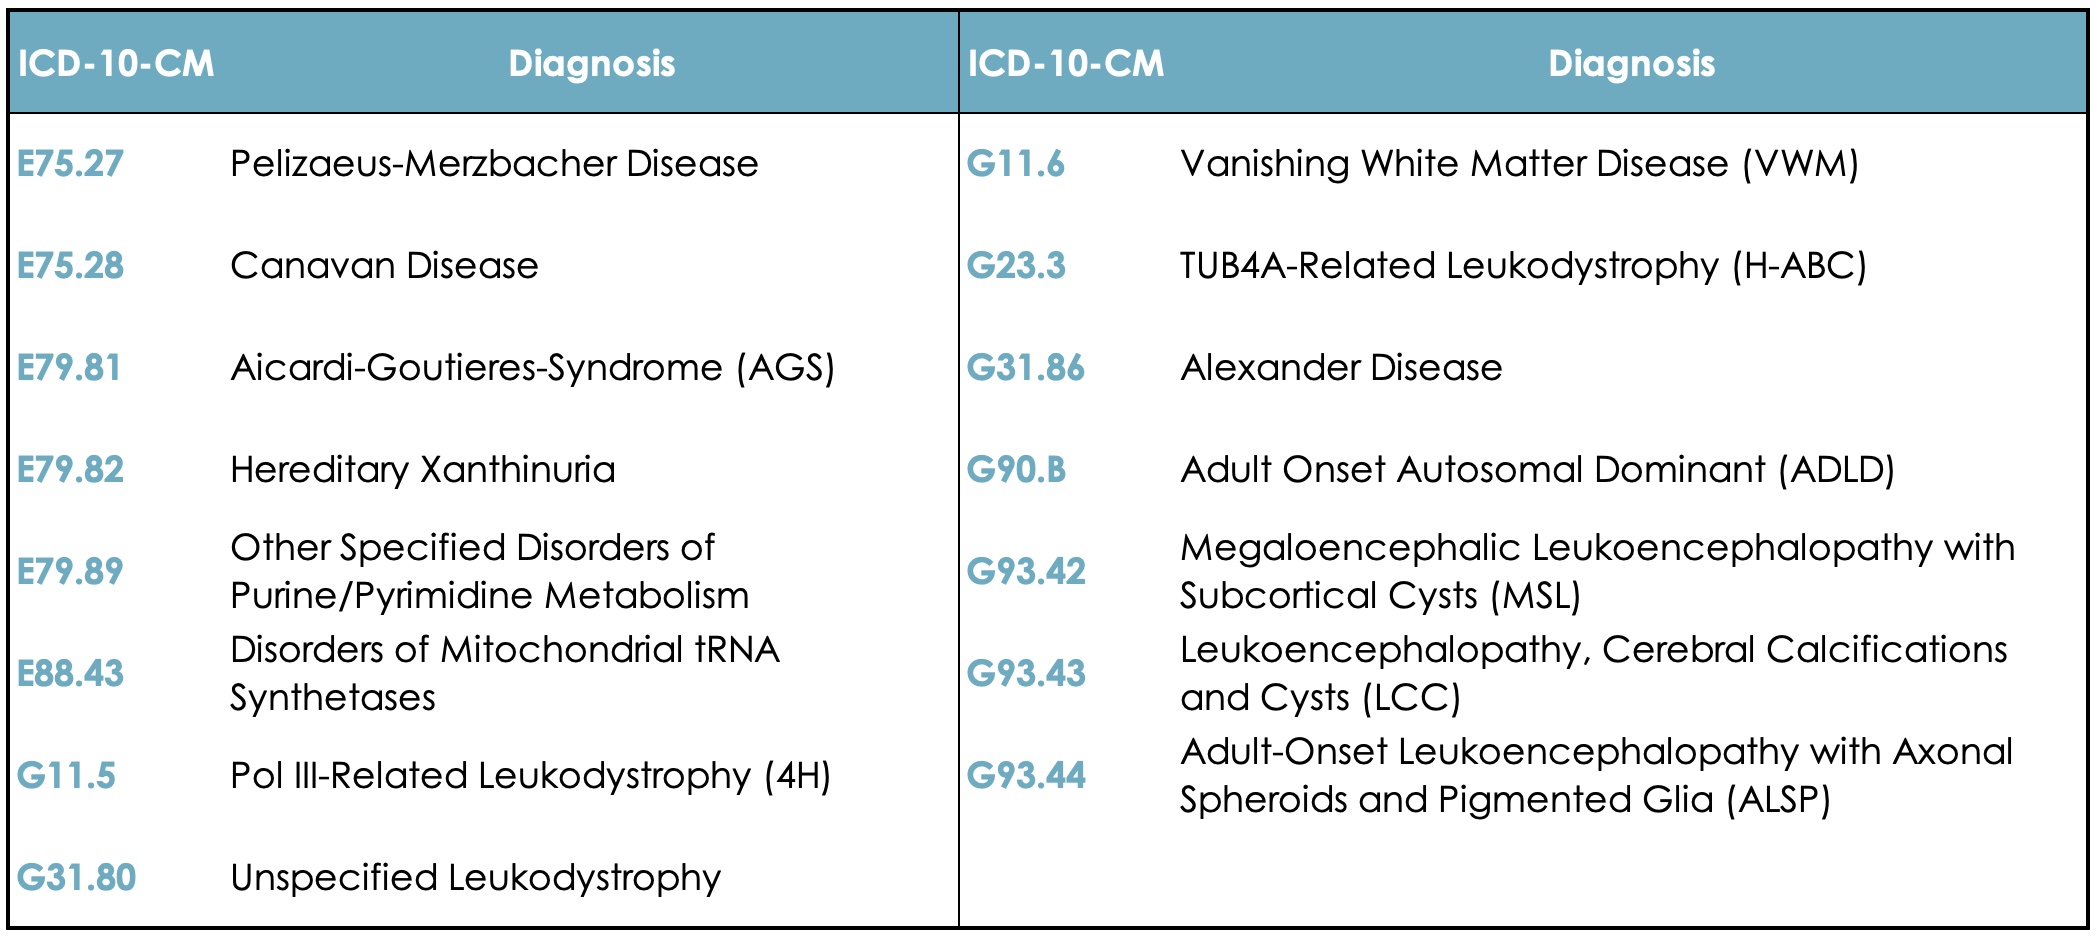 ICD-10-CM codes